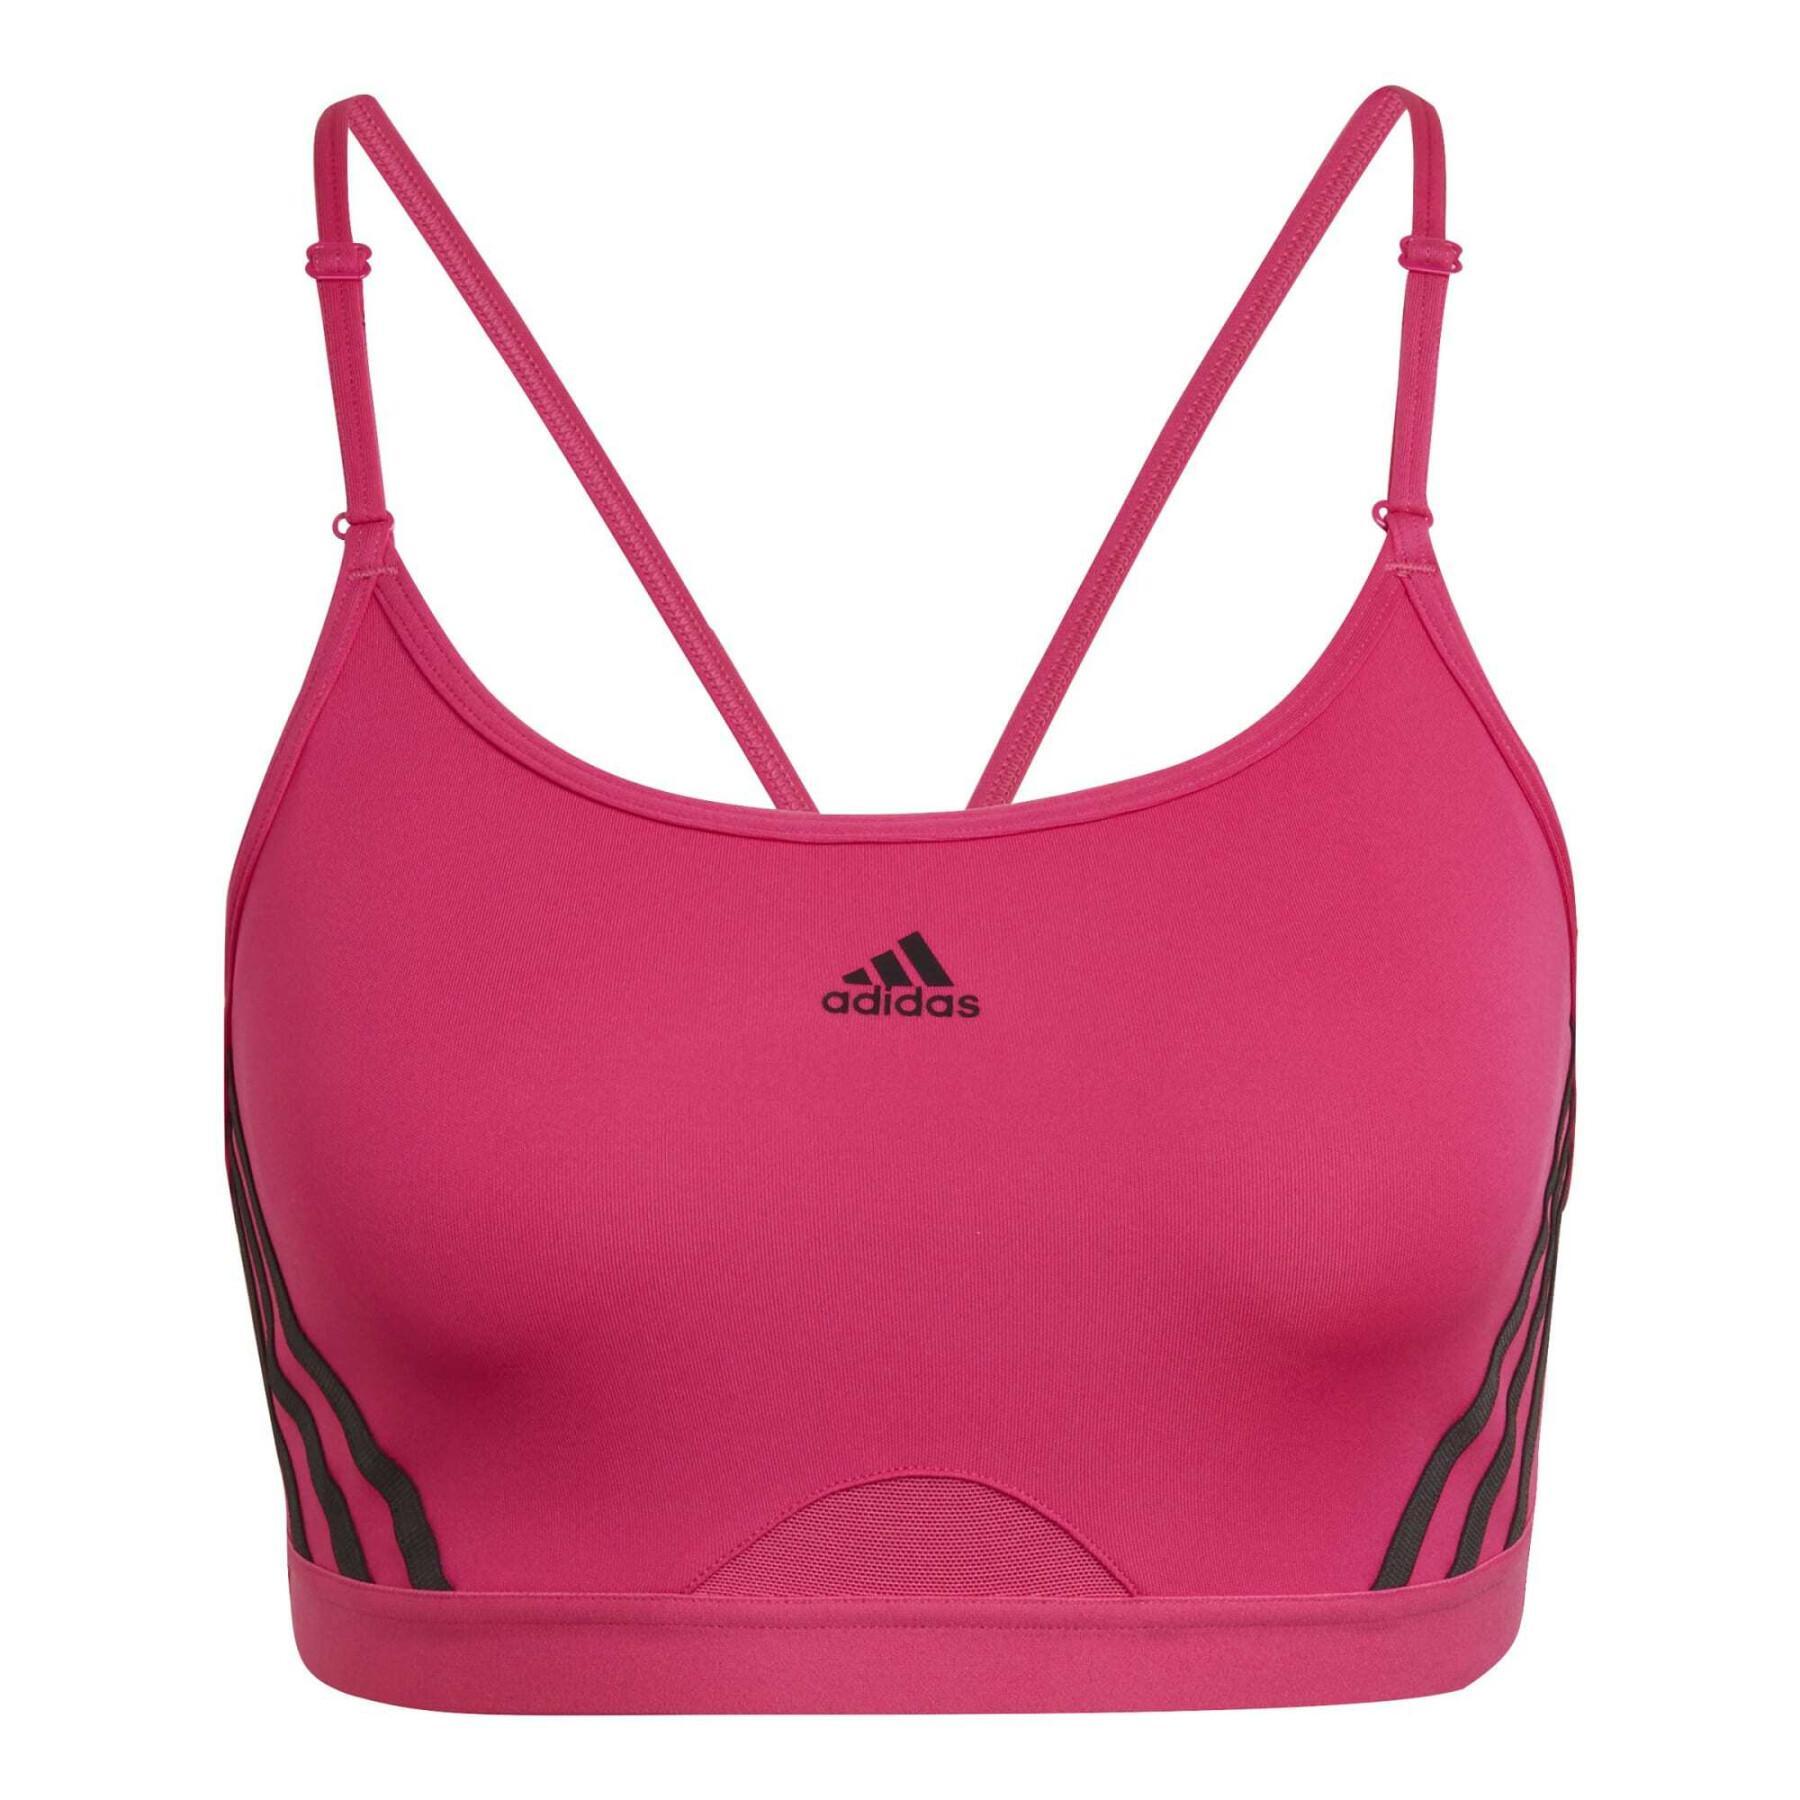 Lightweight training bra for women adidas Aeroreact - Sports bras